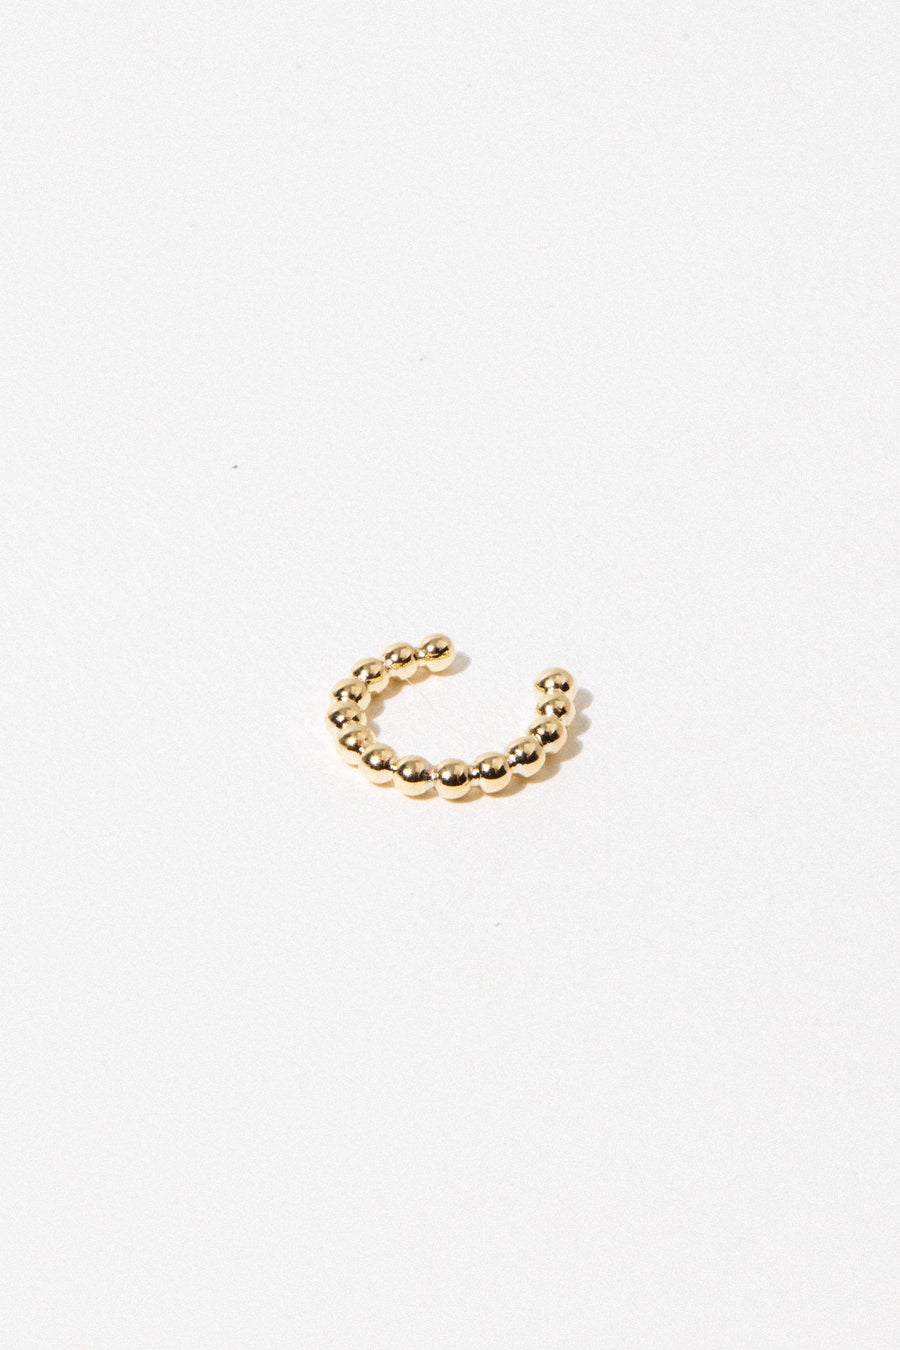 Aimvogue Jewelry Gold Minimalist Ear Cuff